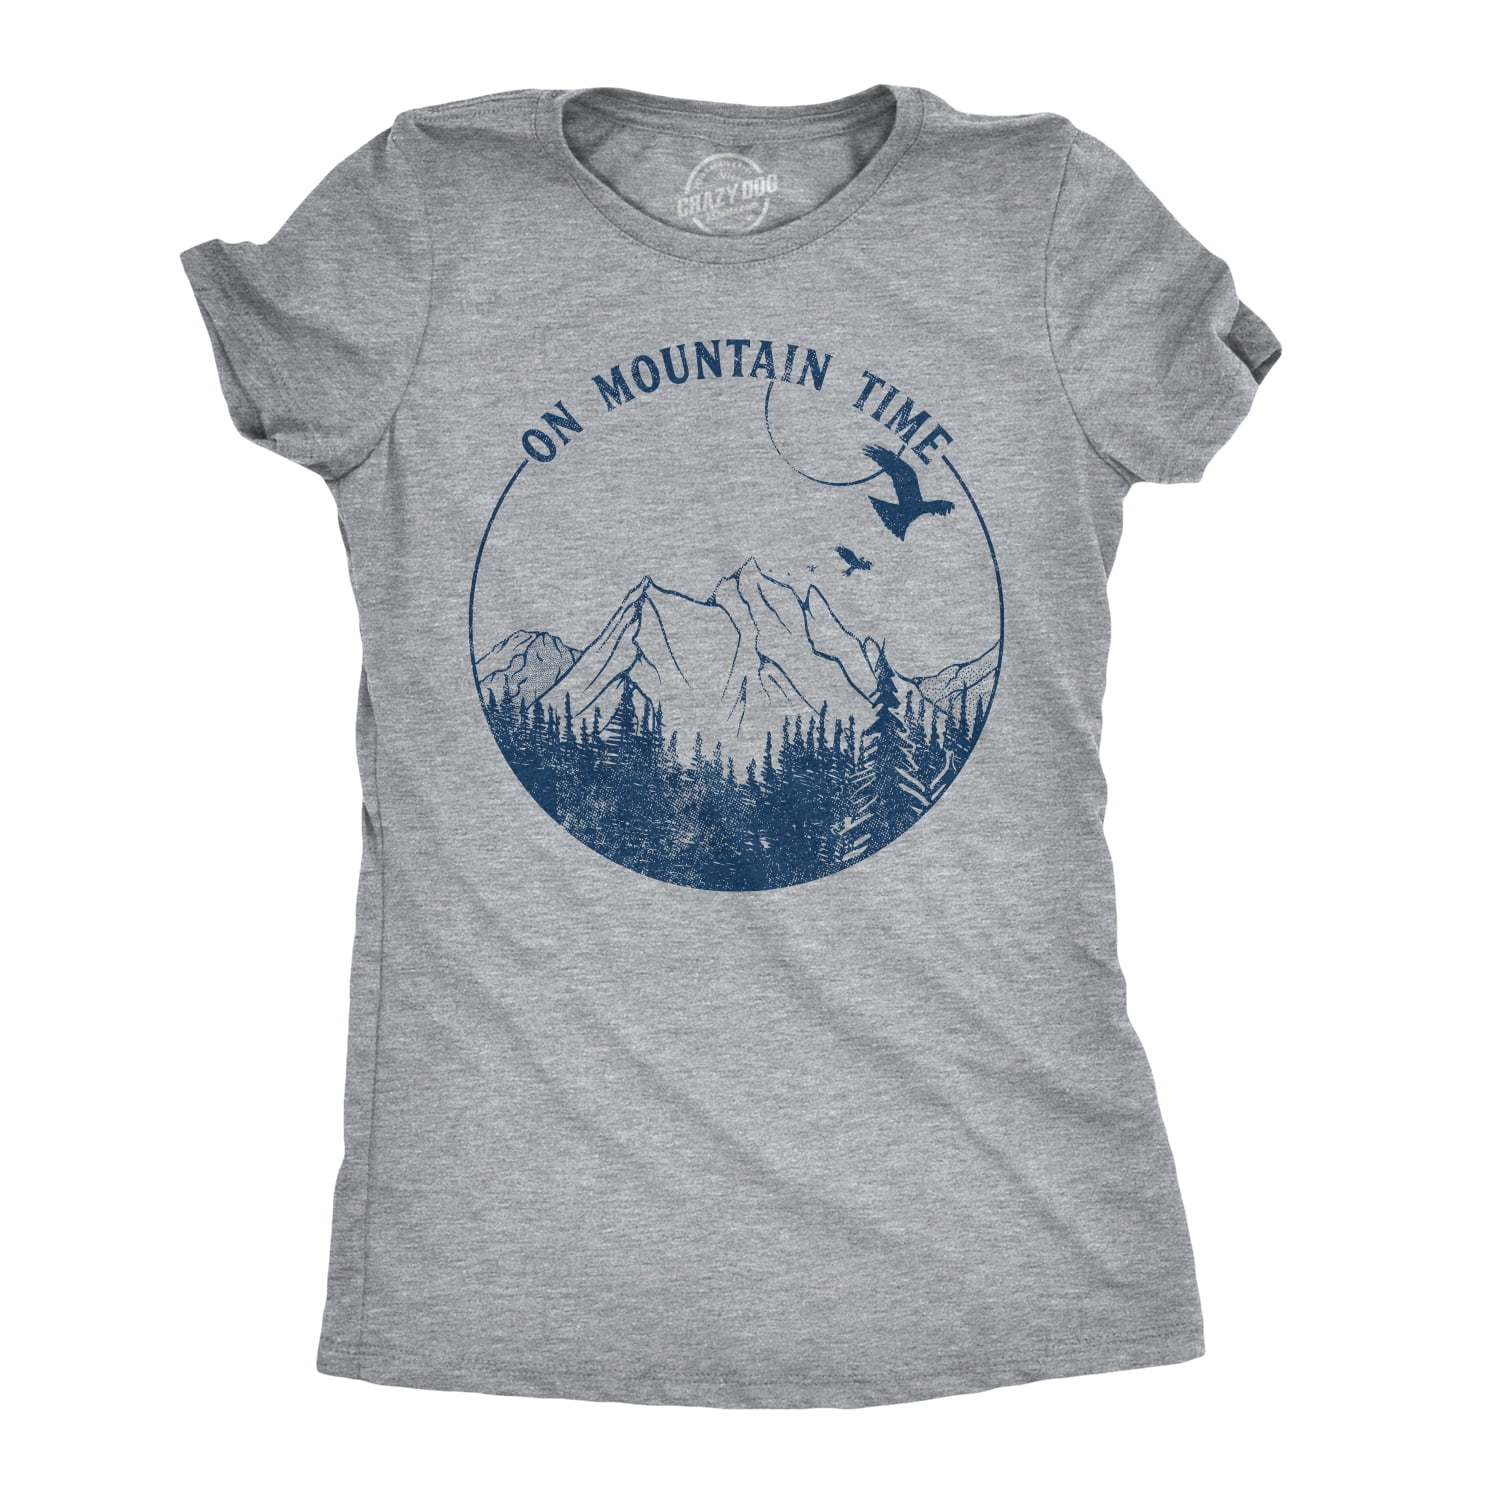 Nature Tshirt Travel Shirt Floral Mountain Graphic Shirt Hiking Shirt Outdoor shirt Adventure Shirt Camping Tshirt Mountain Shirt